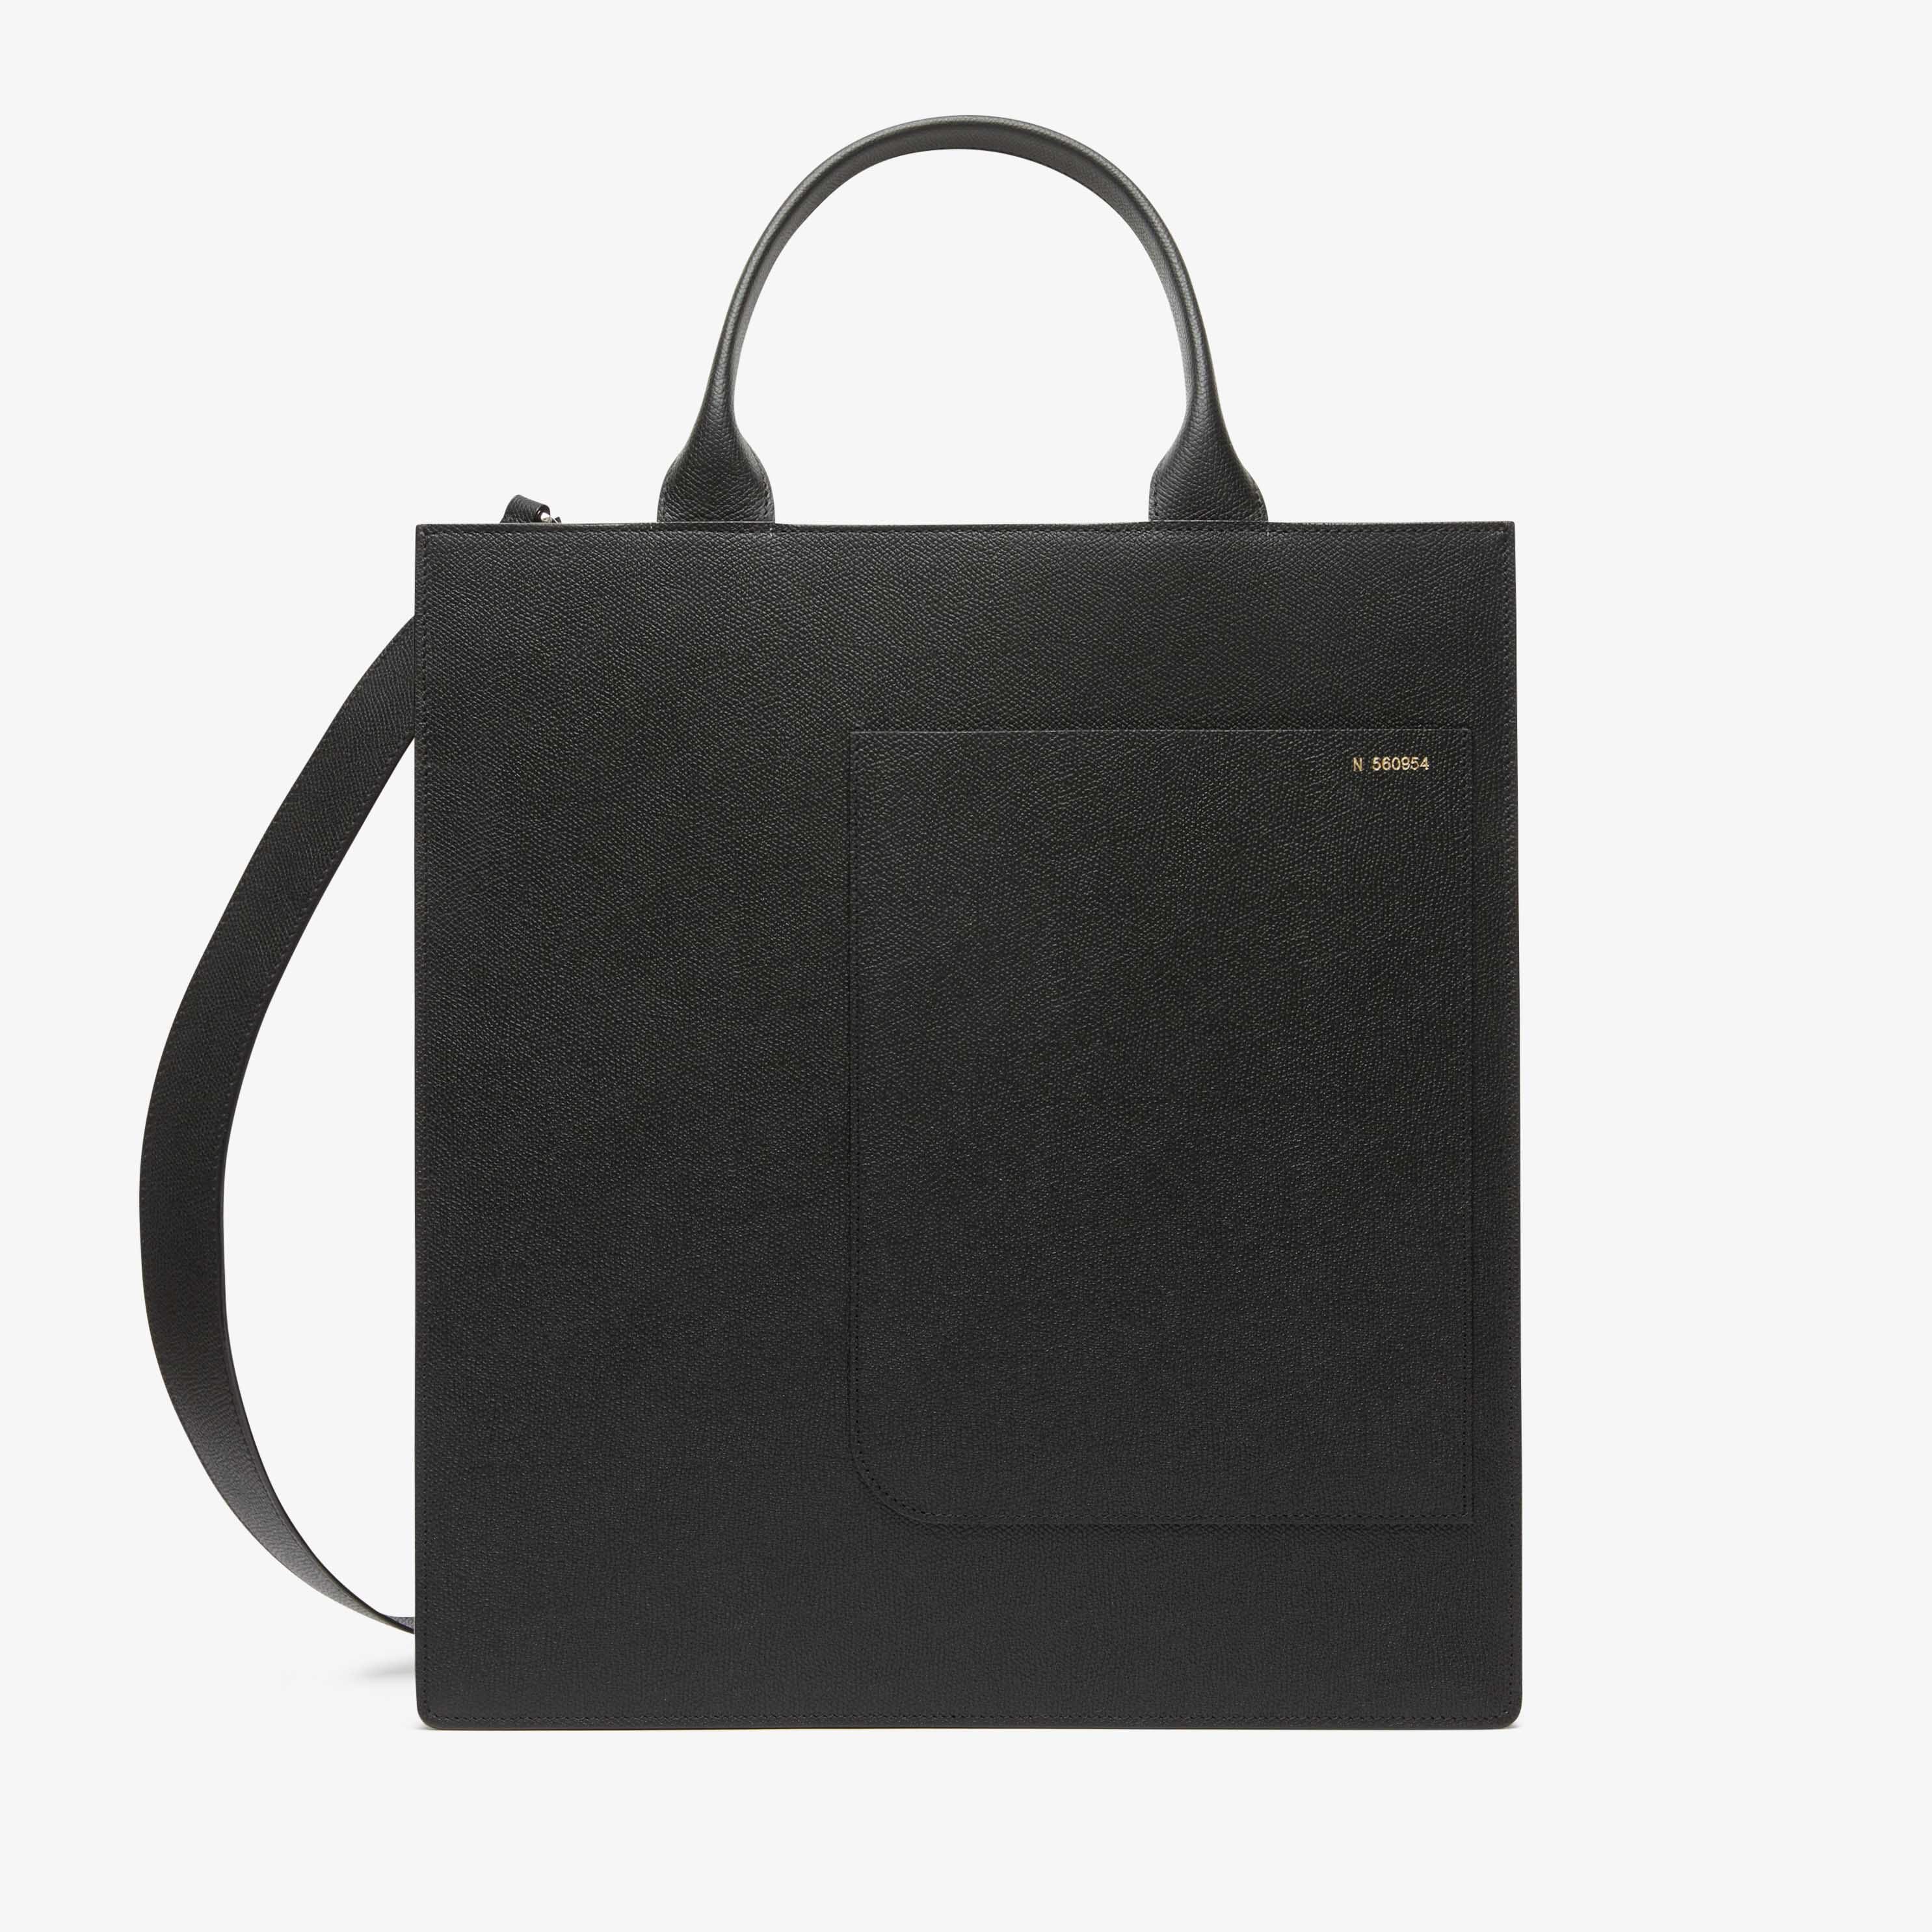 Boxy Top Handle Medium Bag - Black - Vitello VS - Valextra - 1